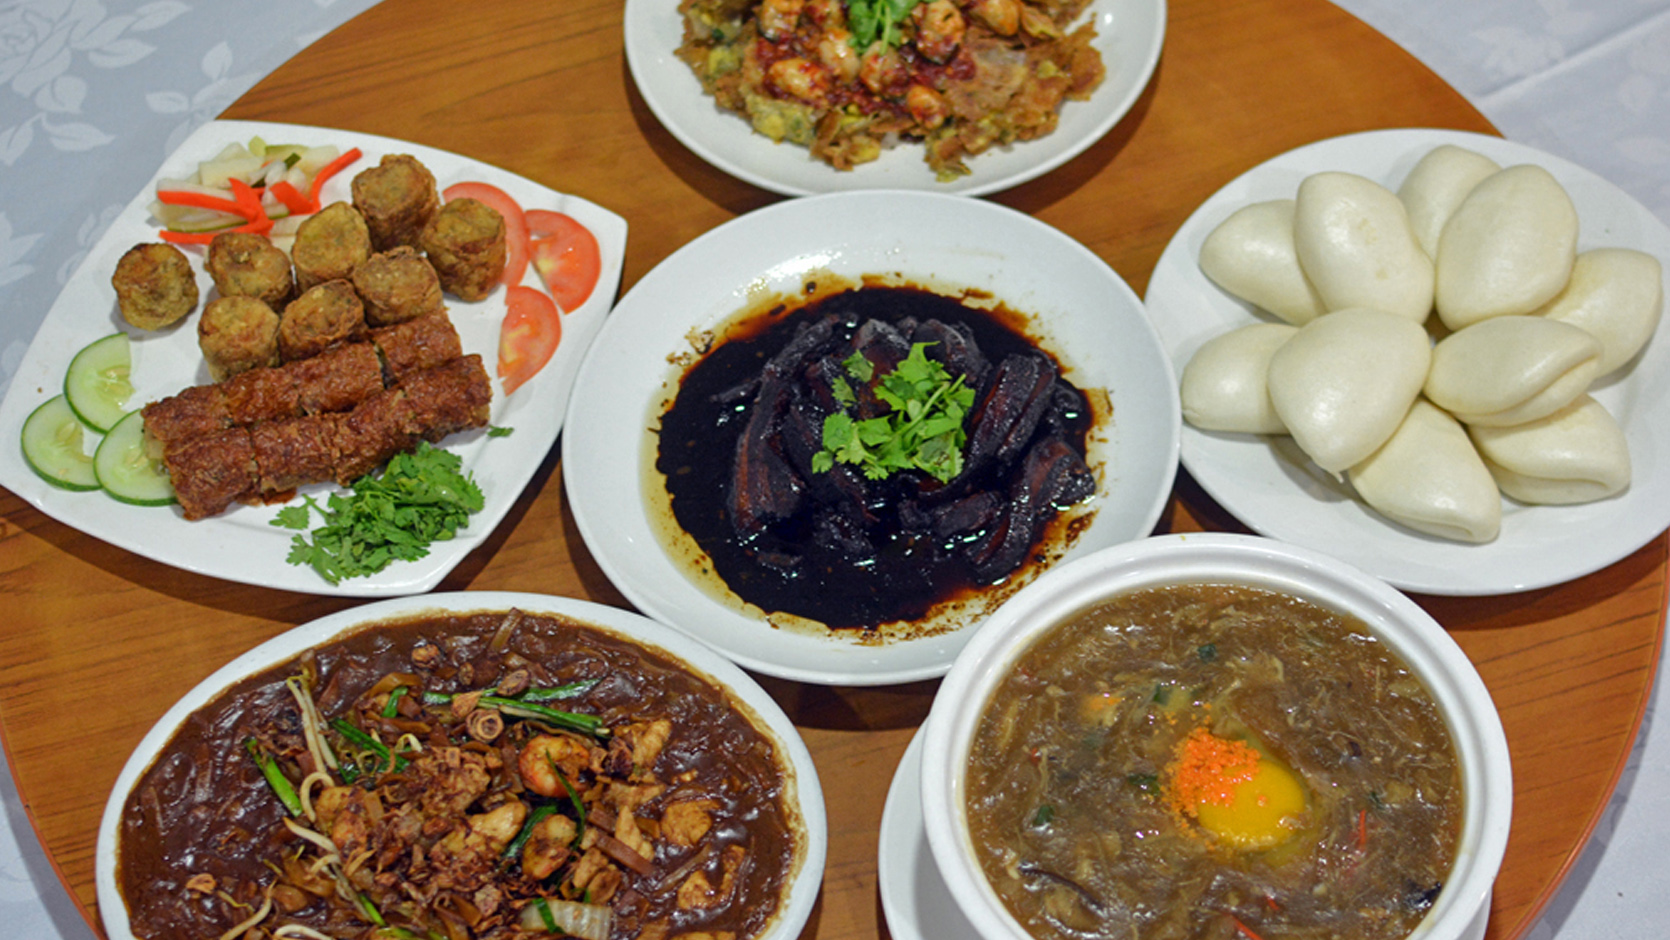 Best Local Food Restaurant In Singapore - Food Ideas